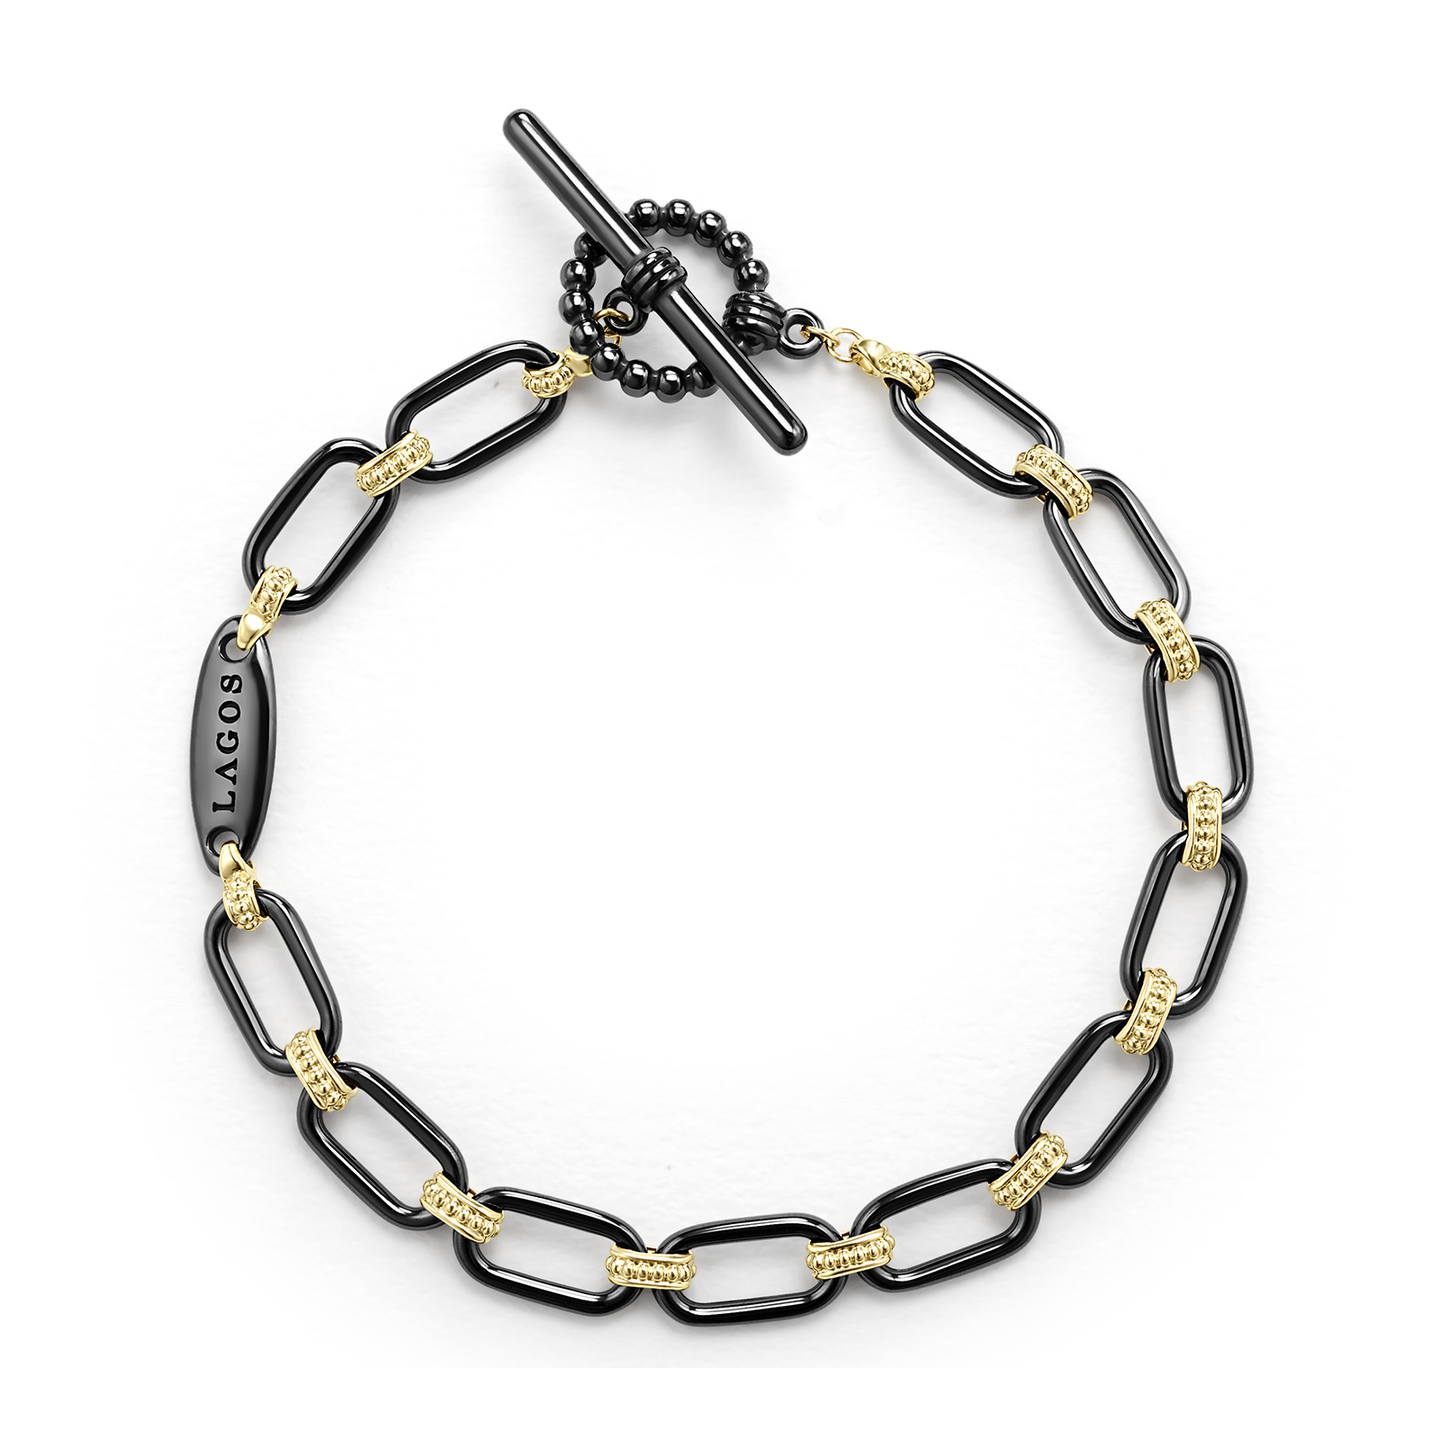 LAGOS Signature Caviar 18K Gold and Black Ceramic Link Bracelet